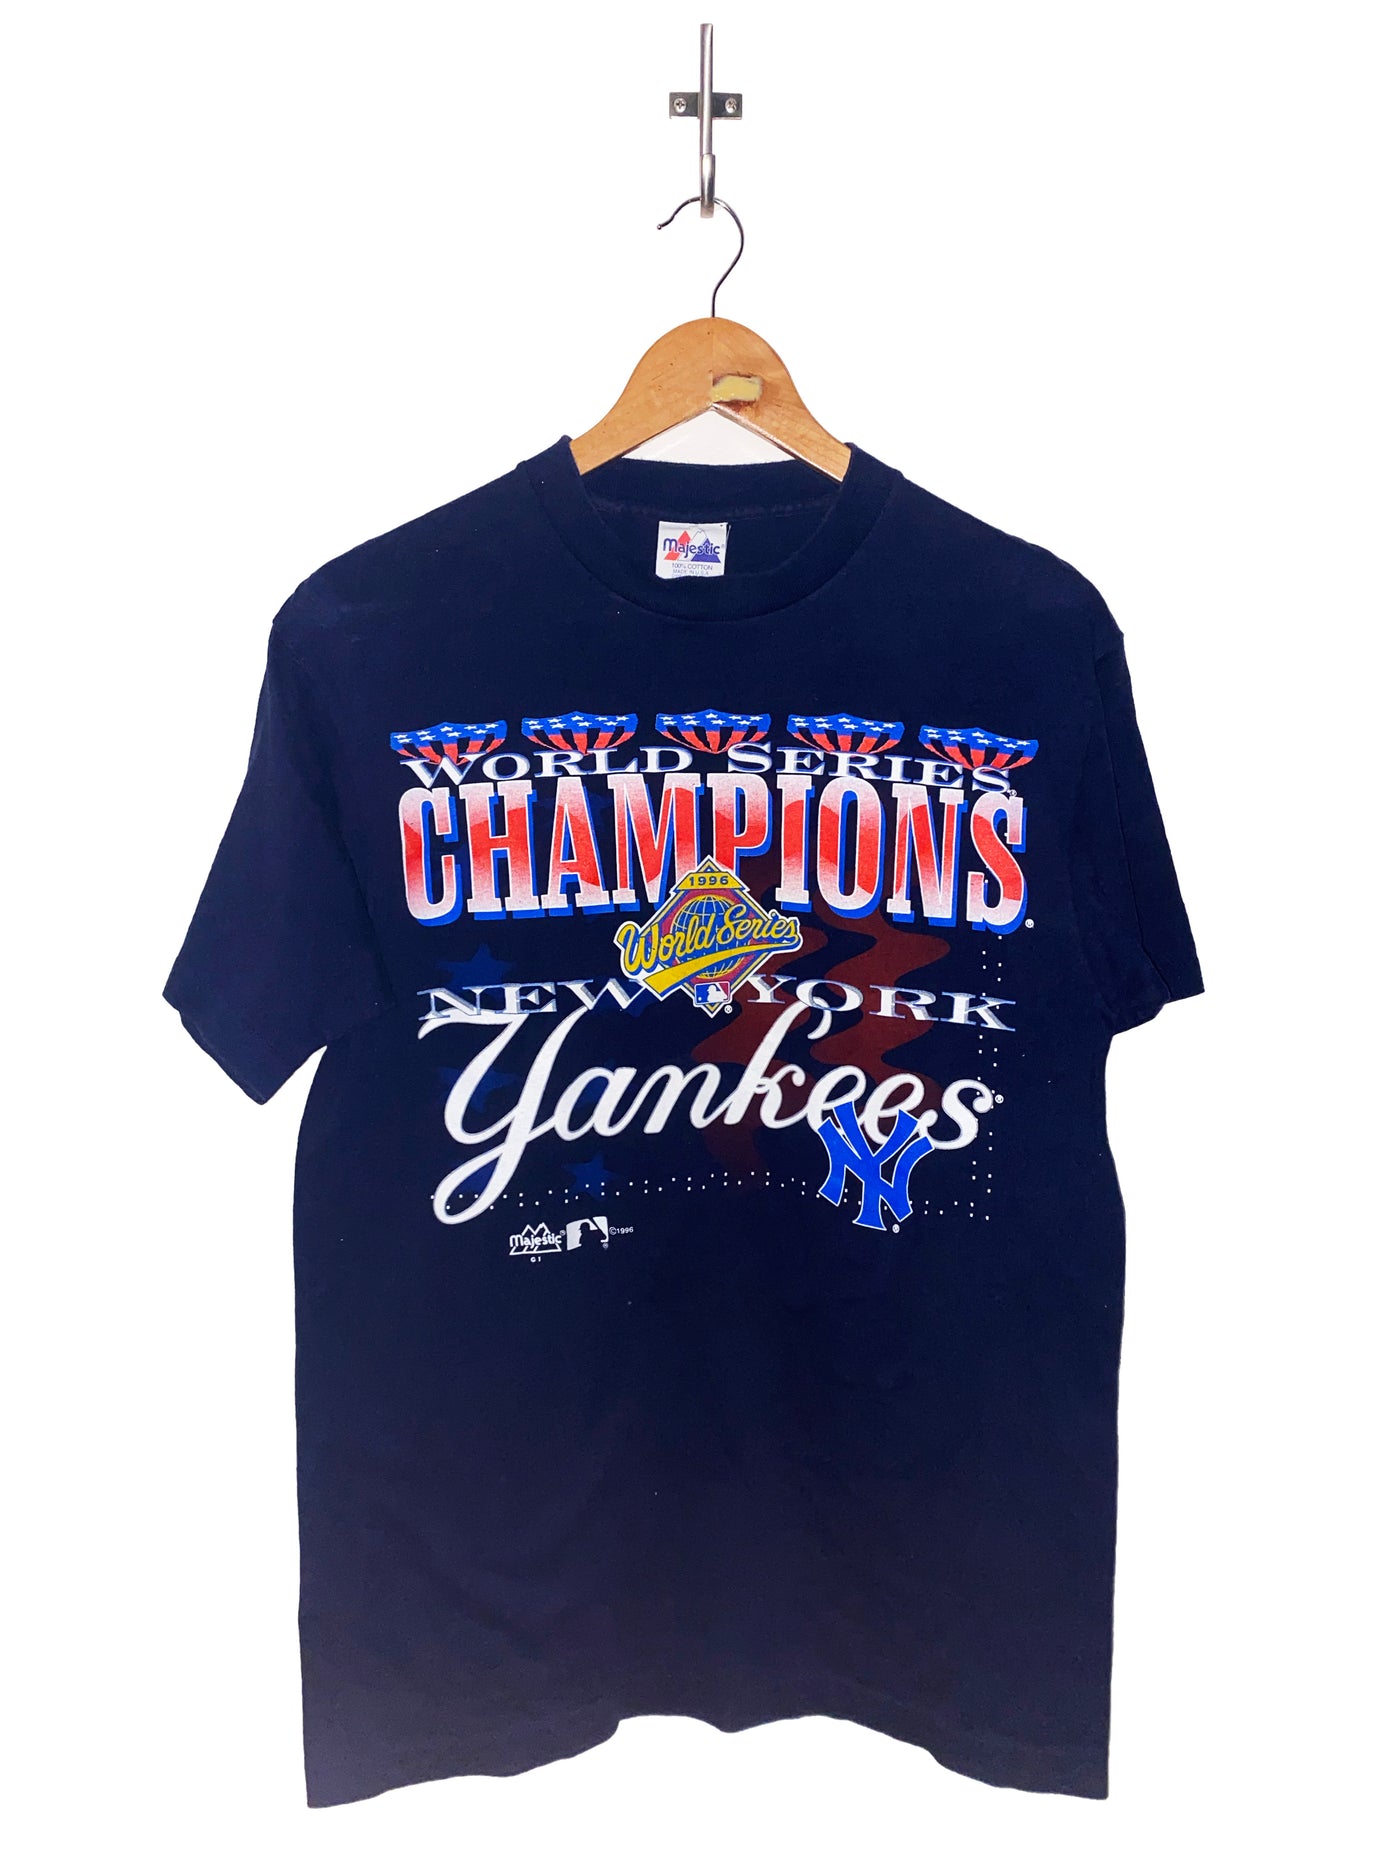 Vintage 1996 Yankees World Series Champions T-Shirt